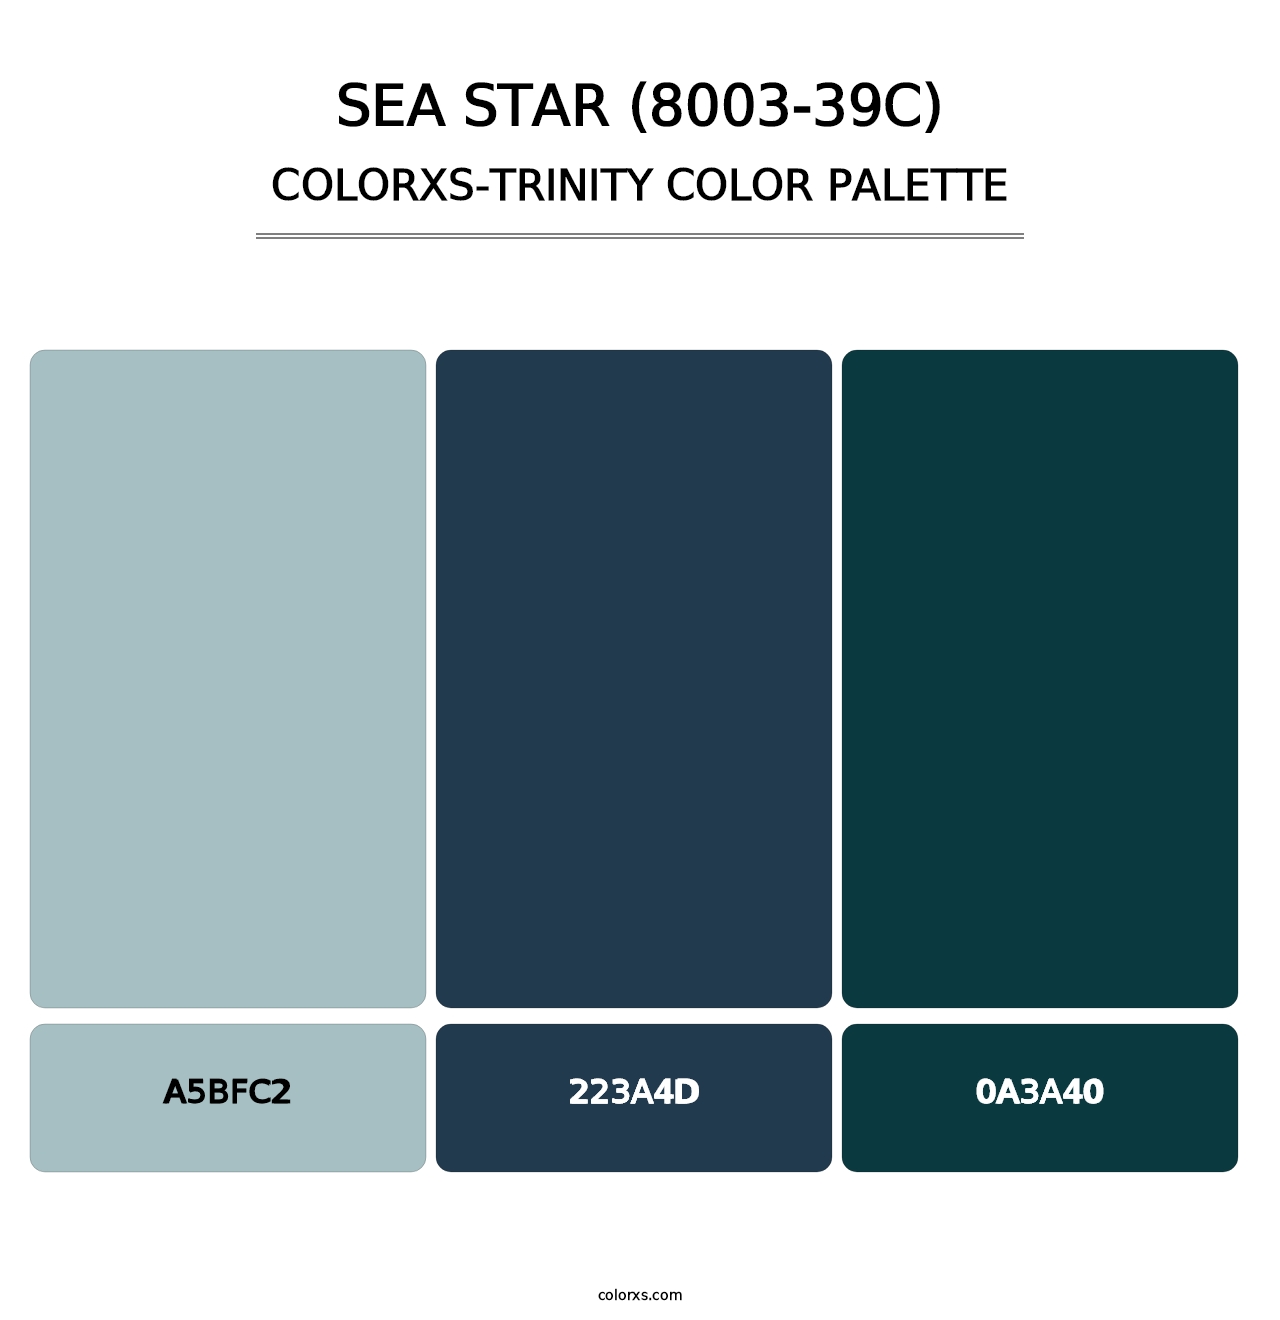 Sea Star (8003-39C) - Colorxs Trinity Palette